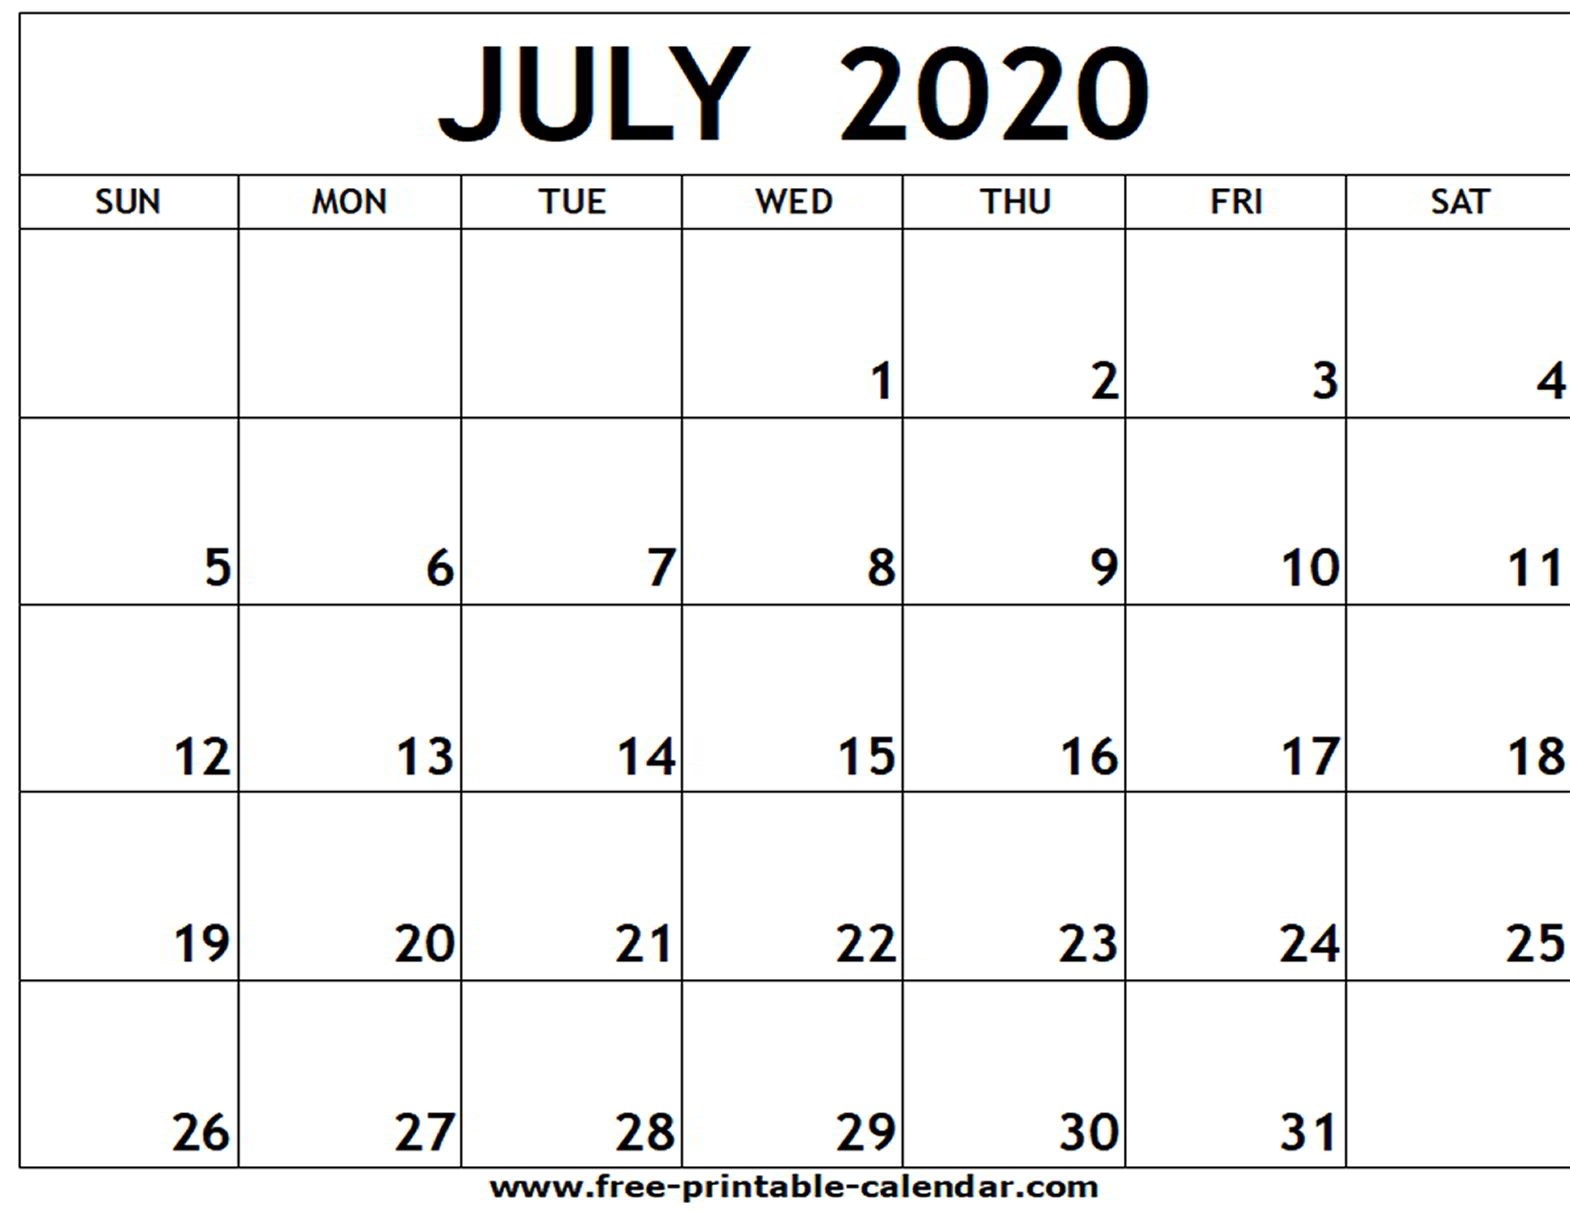 July 2020 Printable Calendar - Free-Printable-Calendar-Monthly Calendar Of June And July 2020